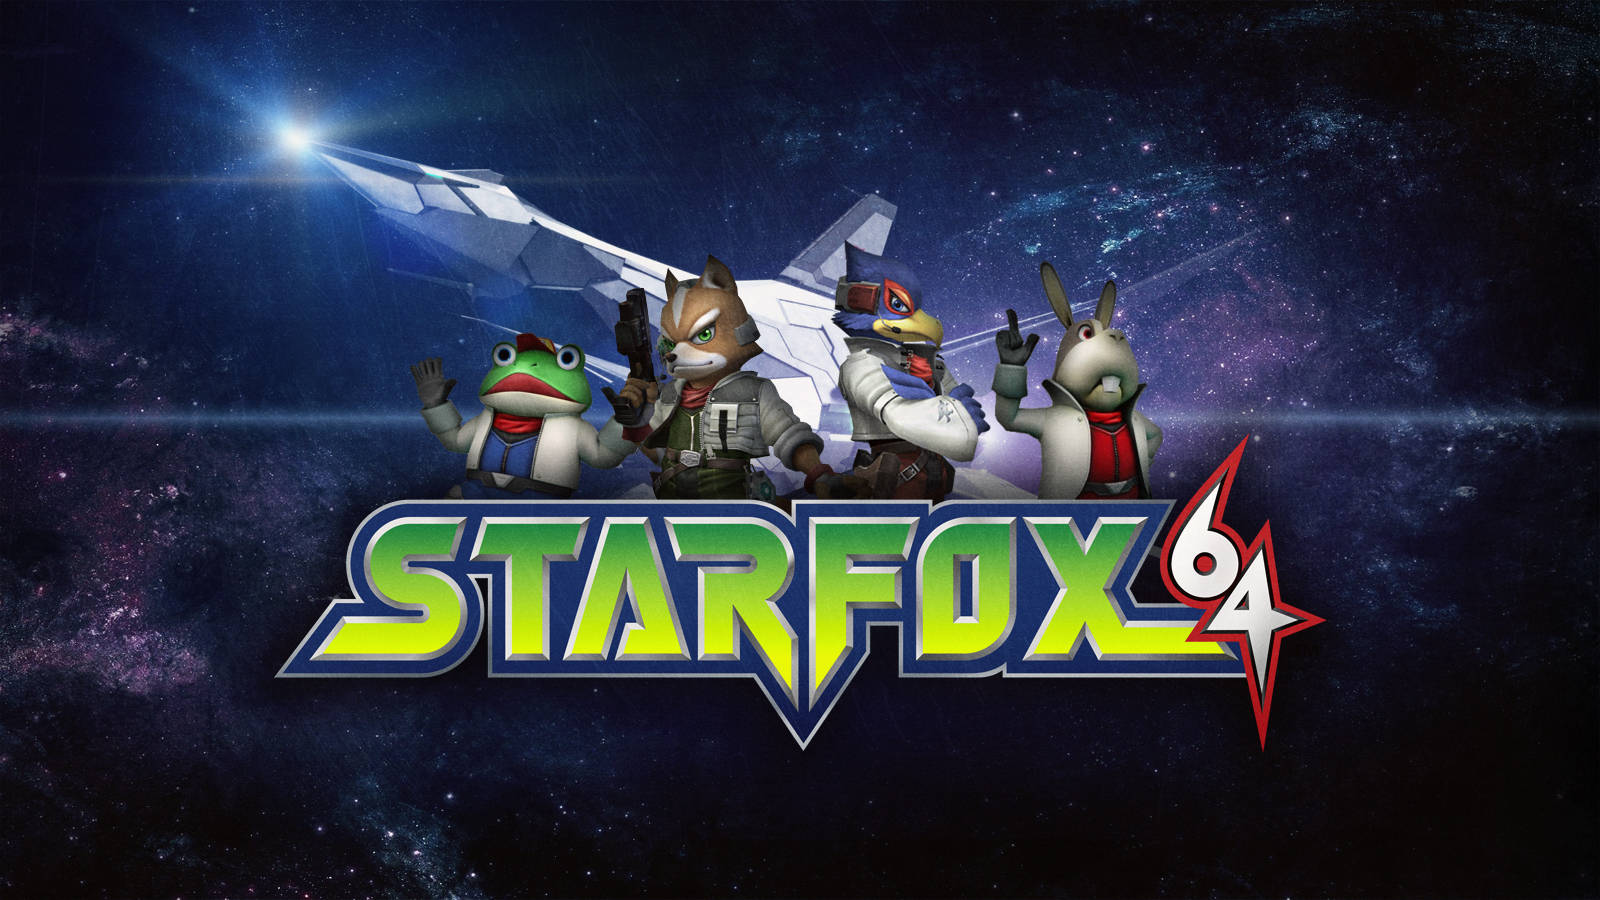 Star Fox 64 Characters On Logo Wallpaper